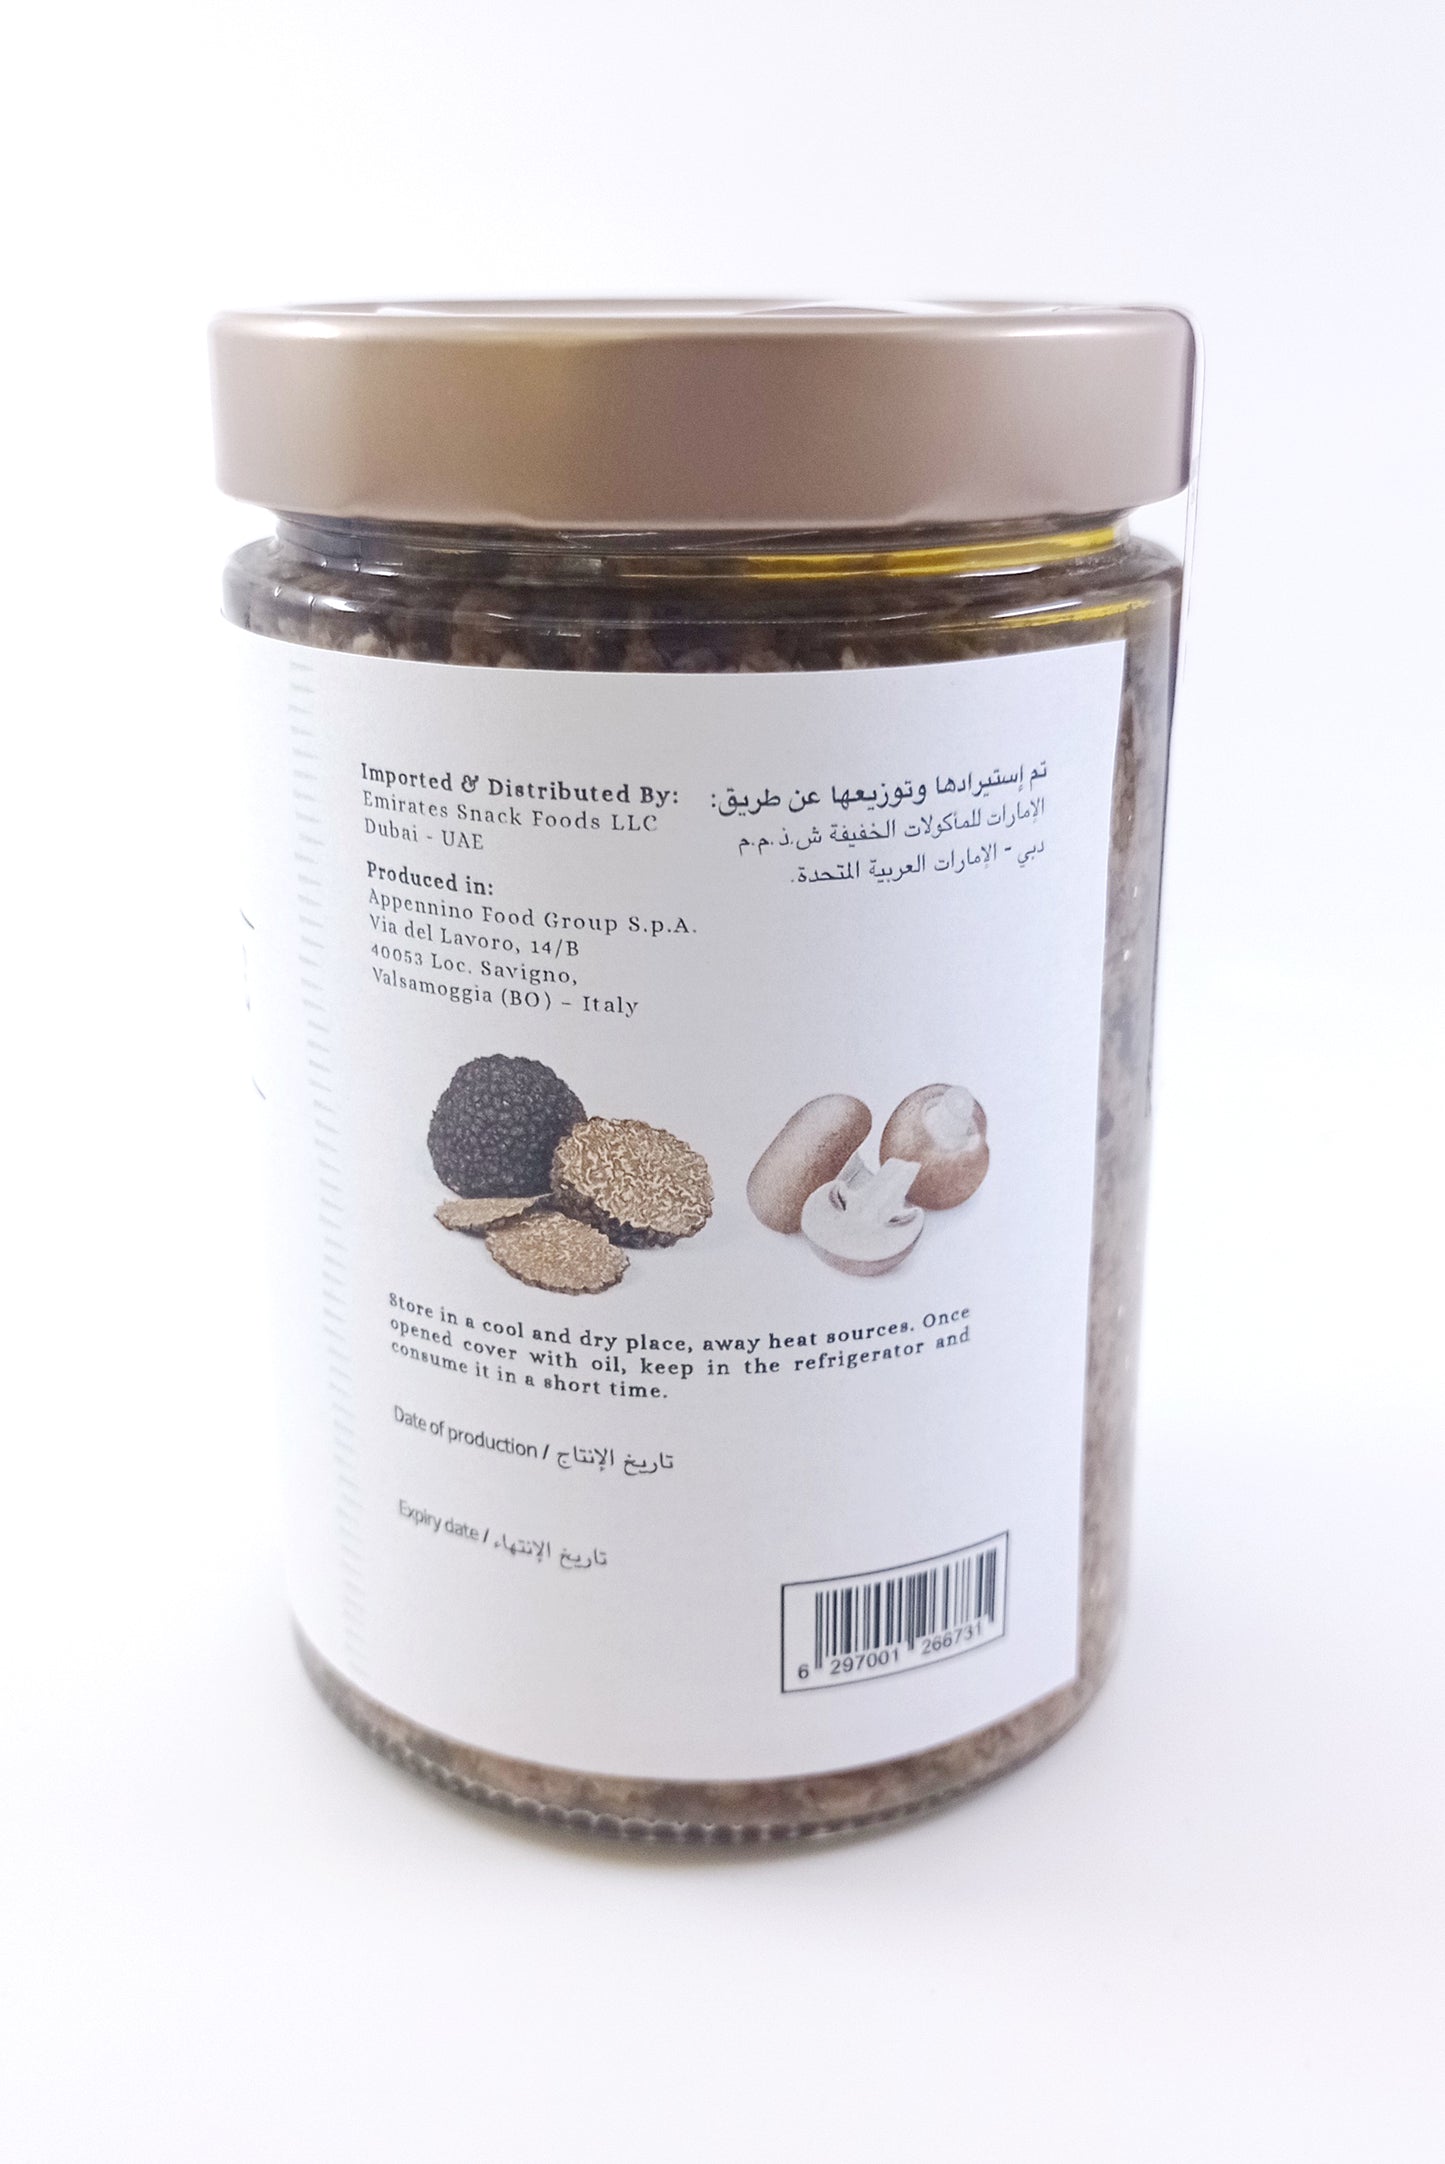 Rich Ribbon Premium Truffle Mushroom Sauce 500gm